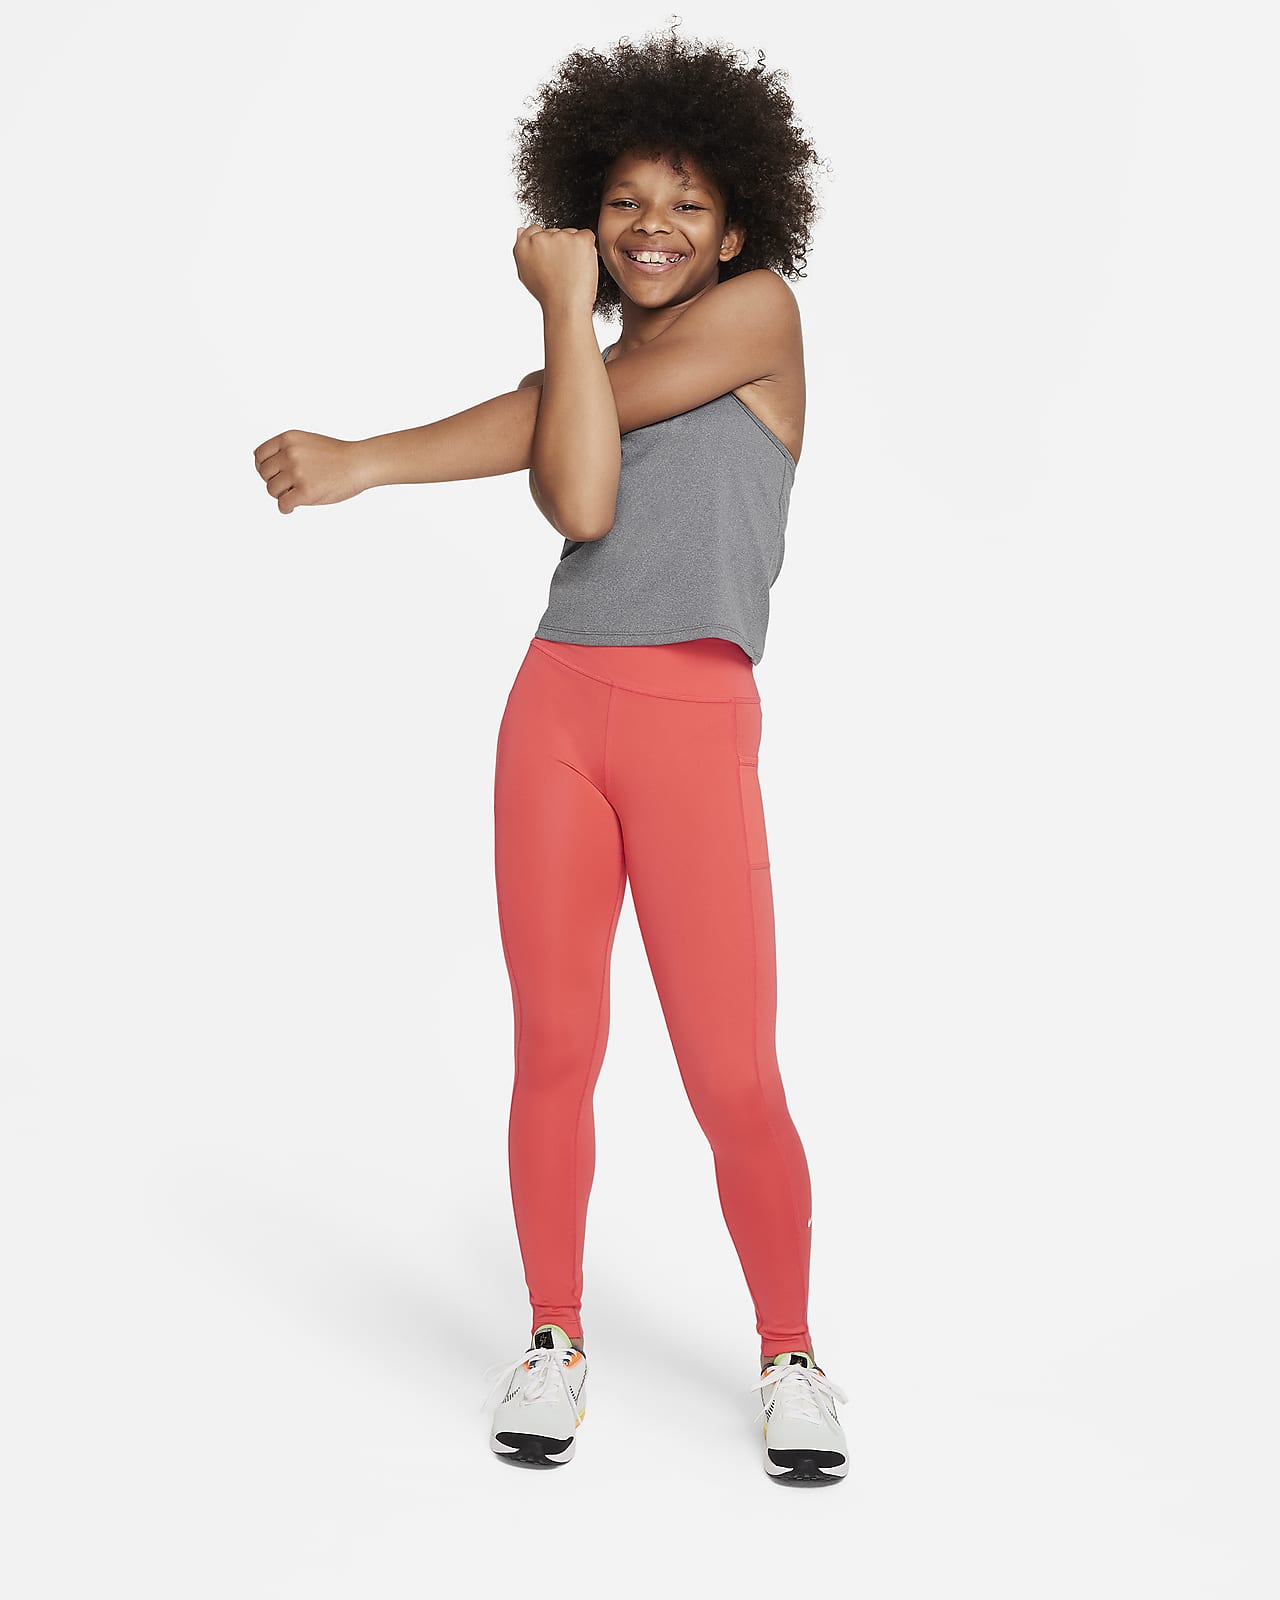 Girls Nike Sports Bra, tank tops, tee - Family Wholesale